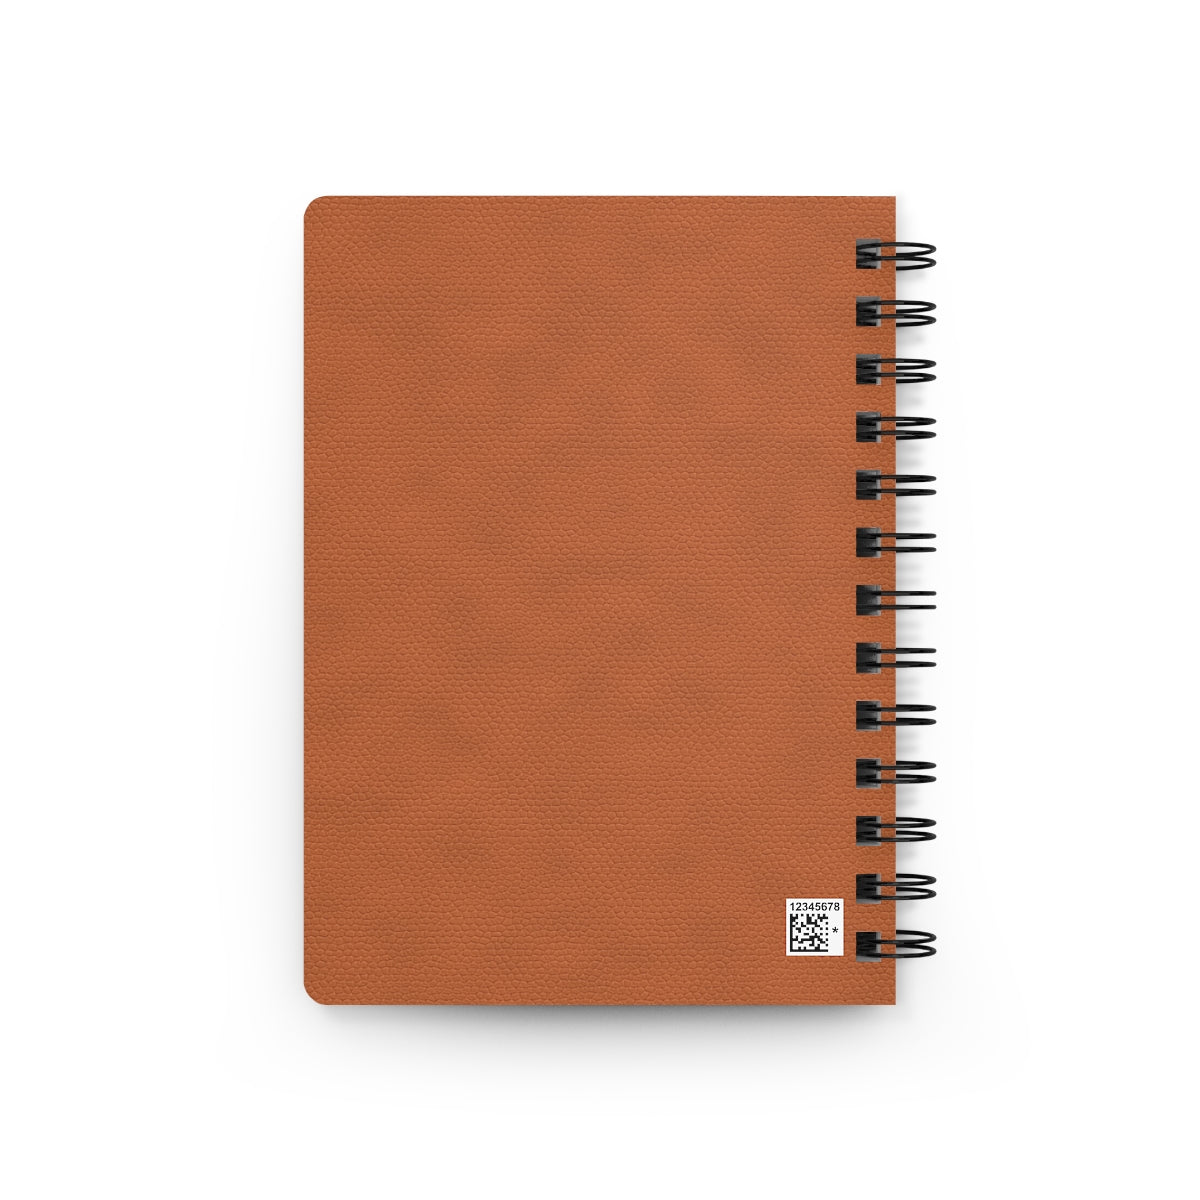 Tan Leather Print Spiral Bound Journal